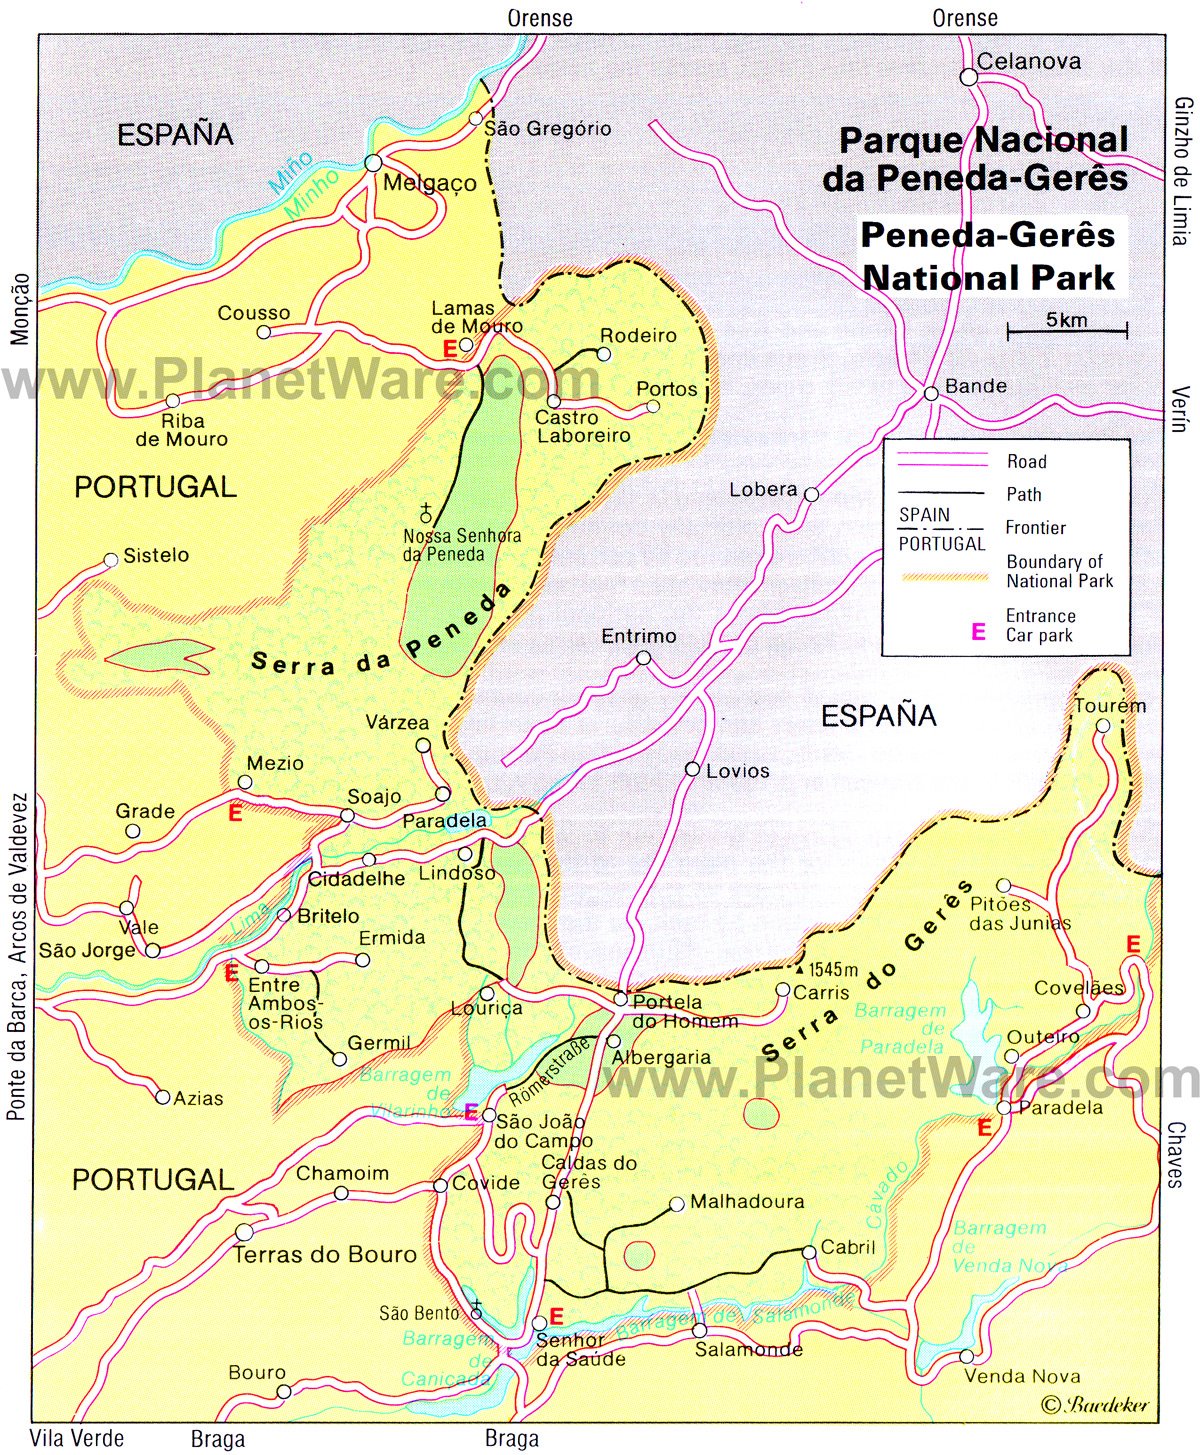 Peneda-Geres National Park - Layout map